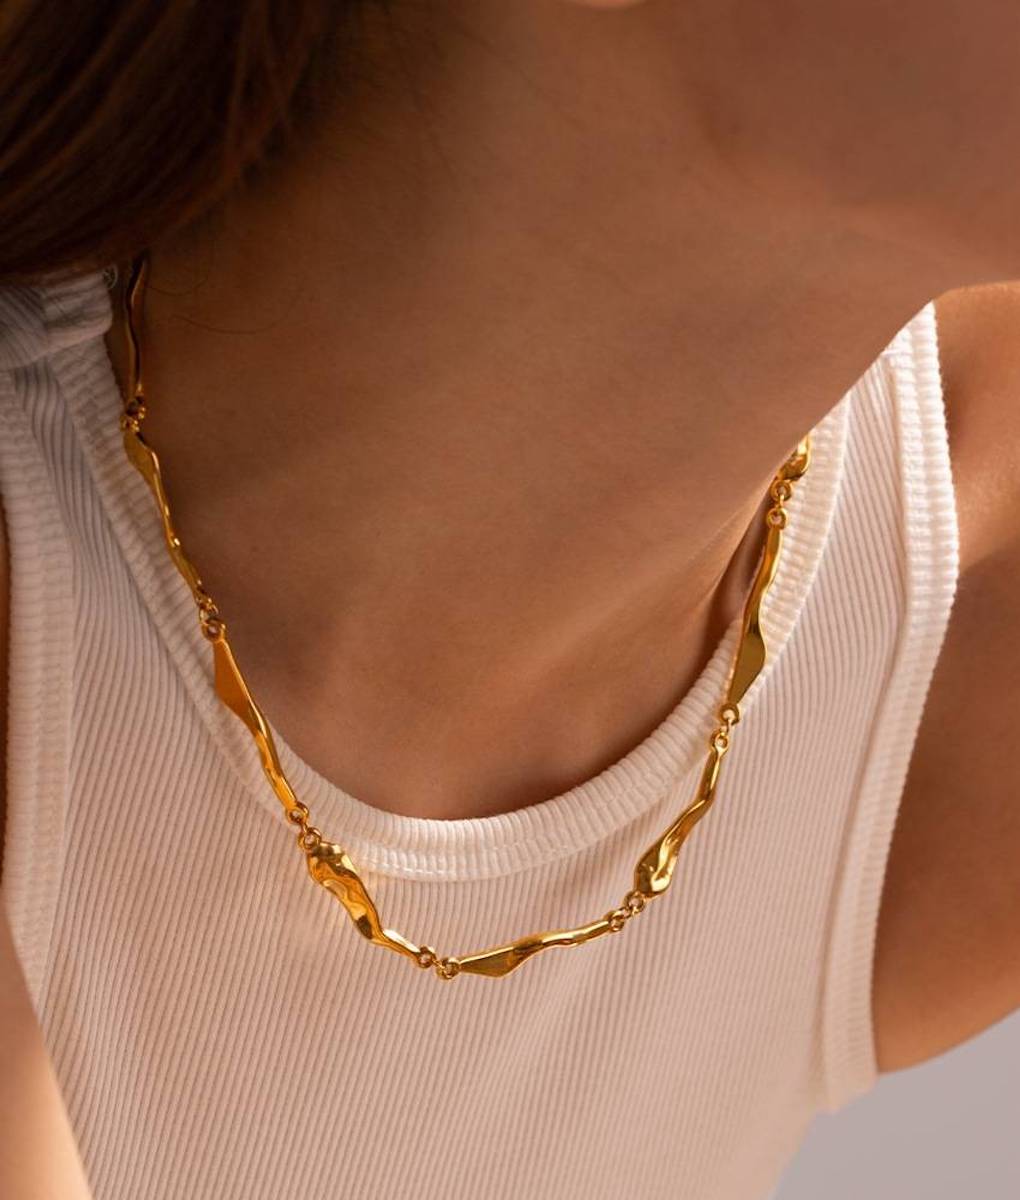 The Sahar Gold Necklace